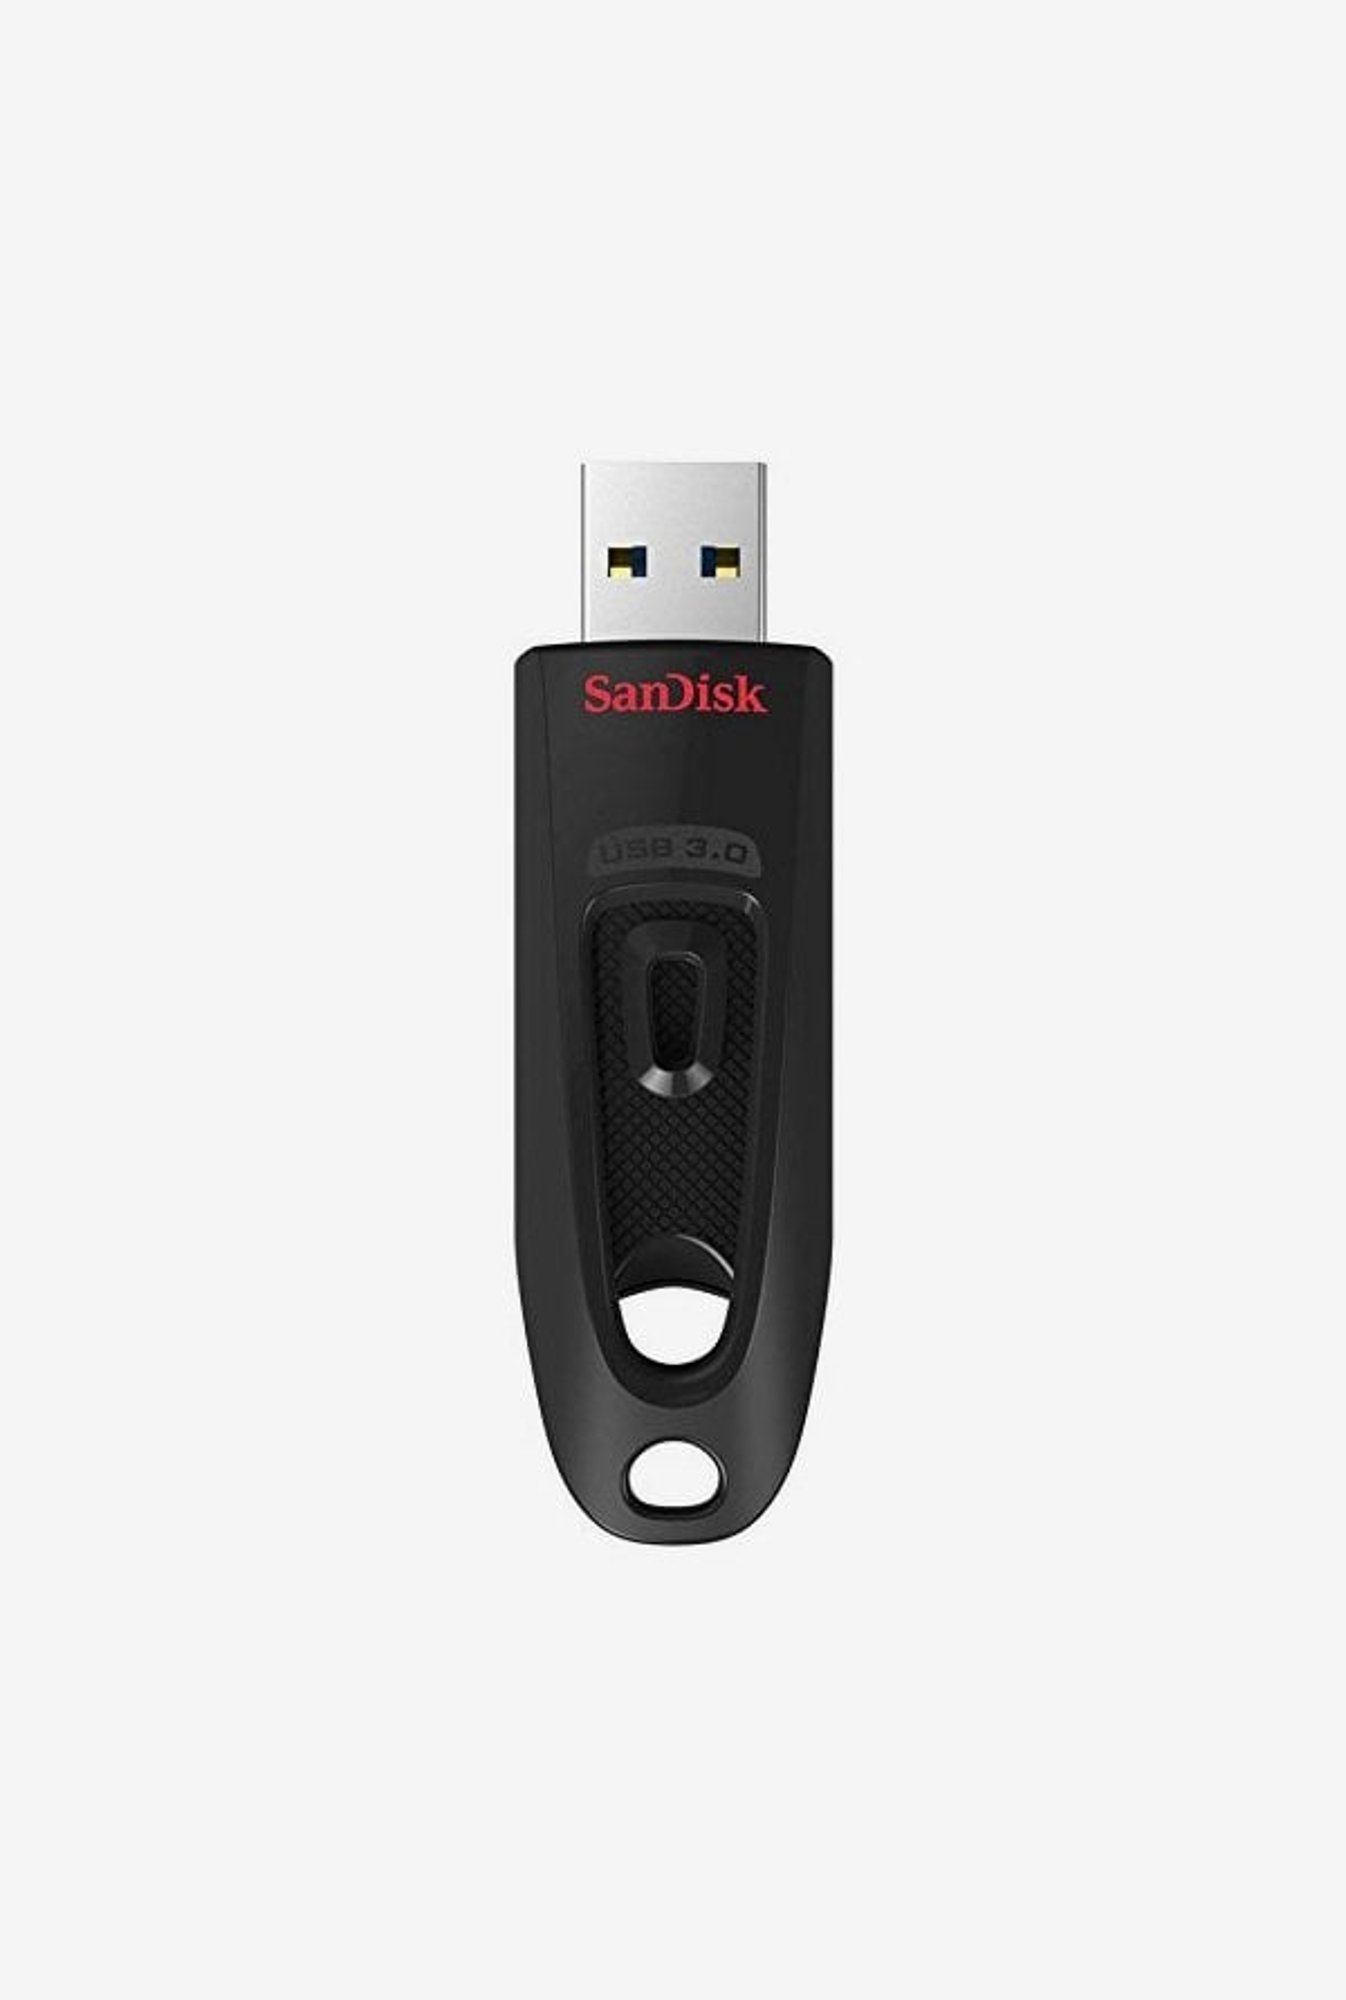 Sandisk Ultra Shift Clé USB 64 Go USB 3.0 100MB/s - Clé USB